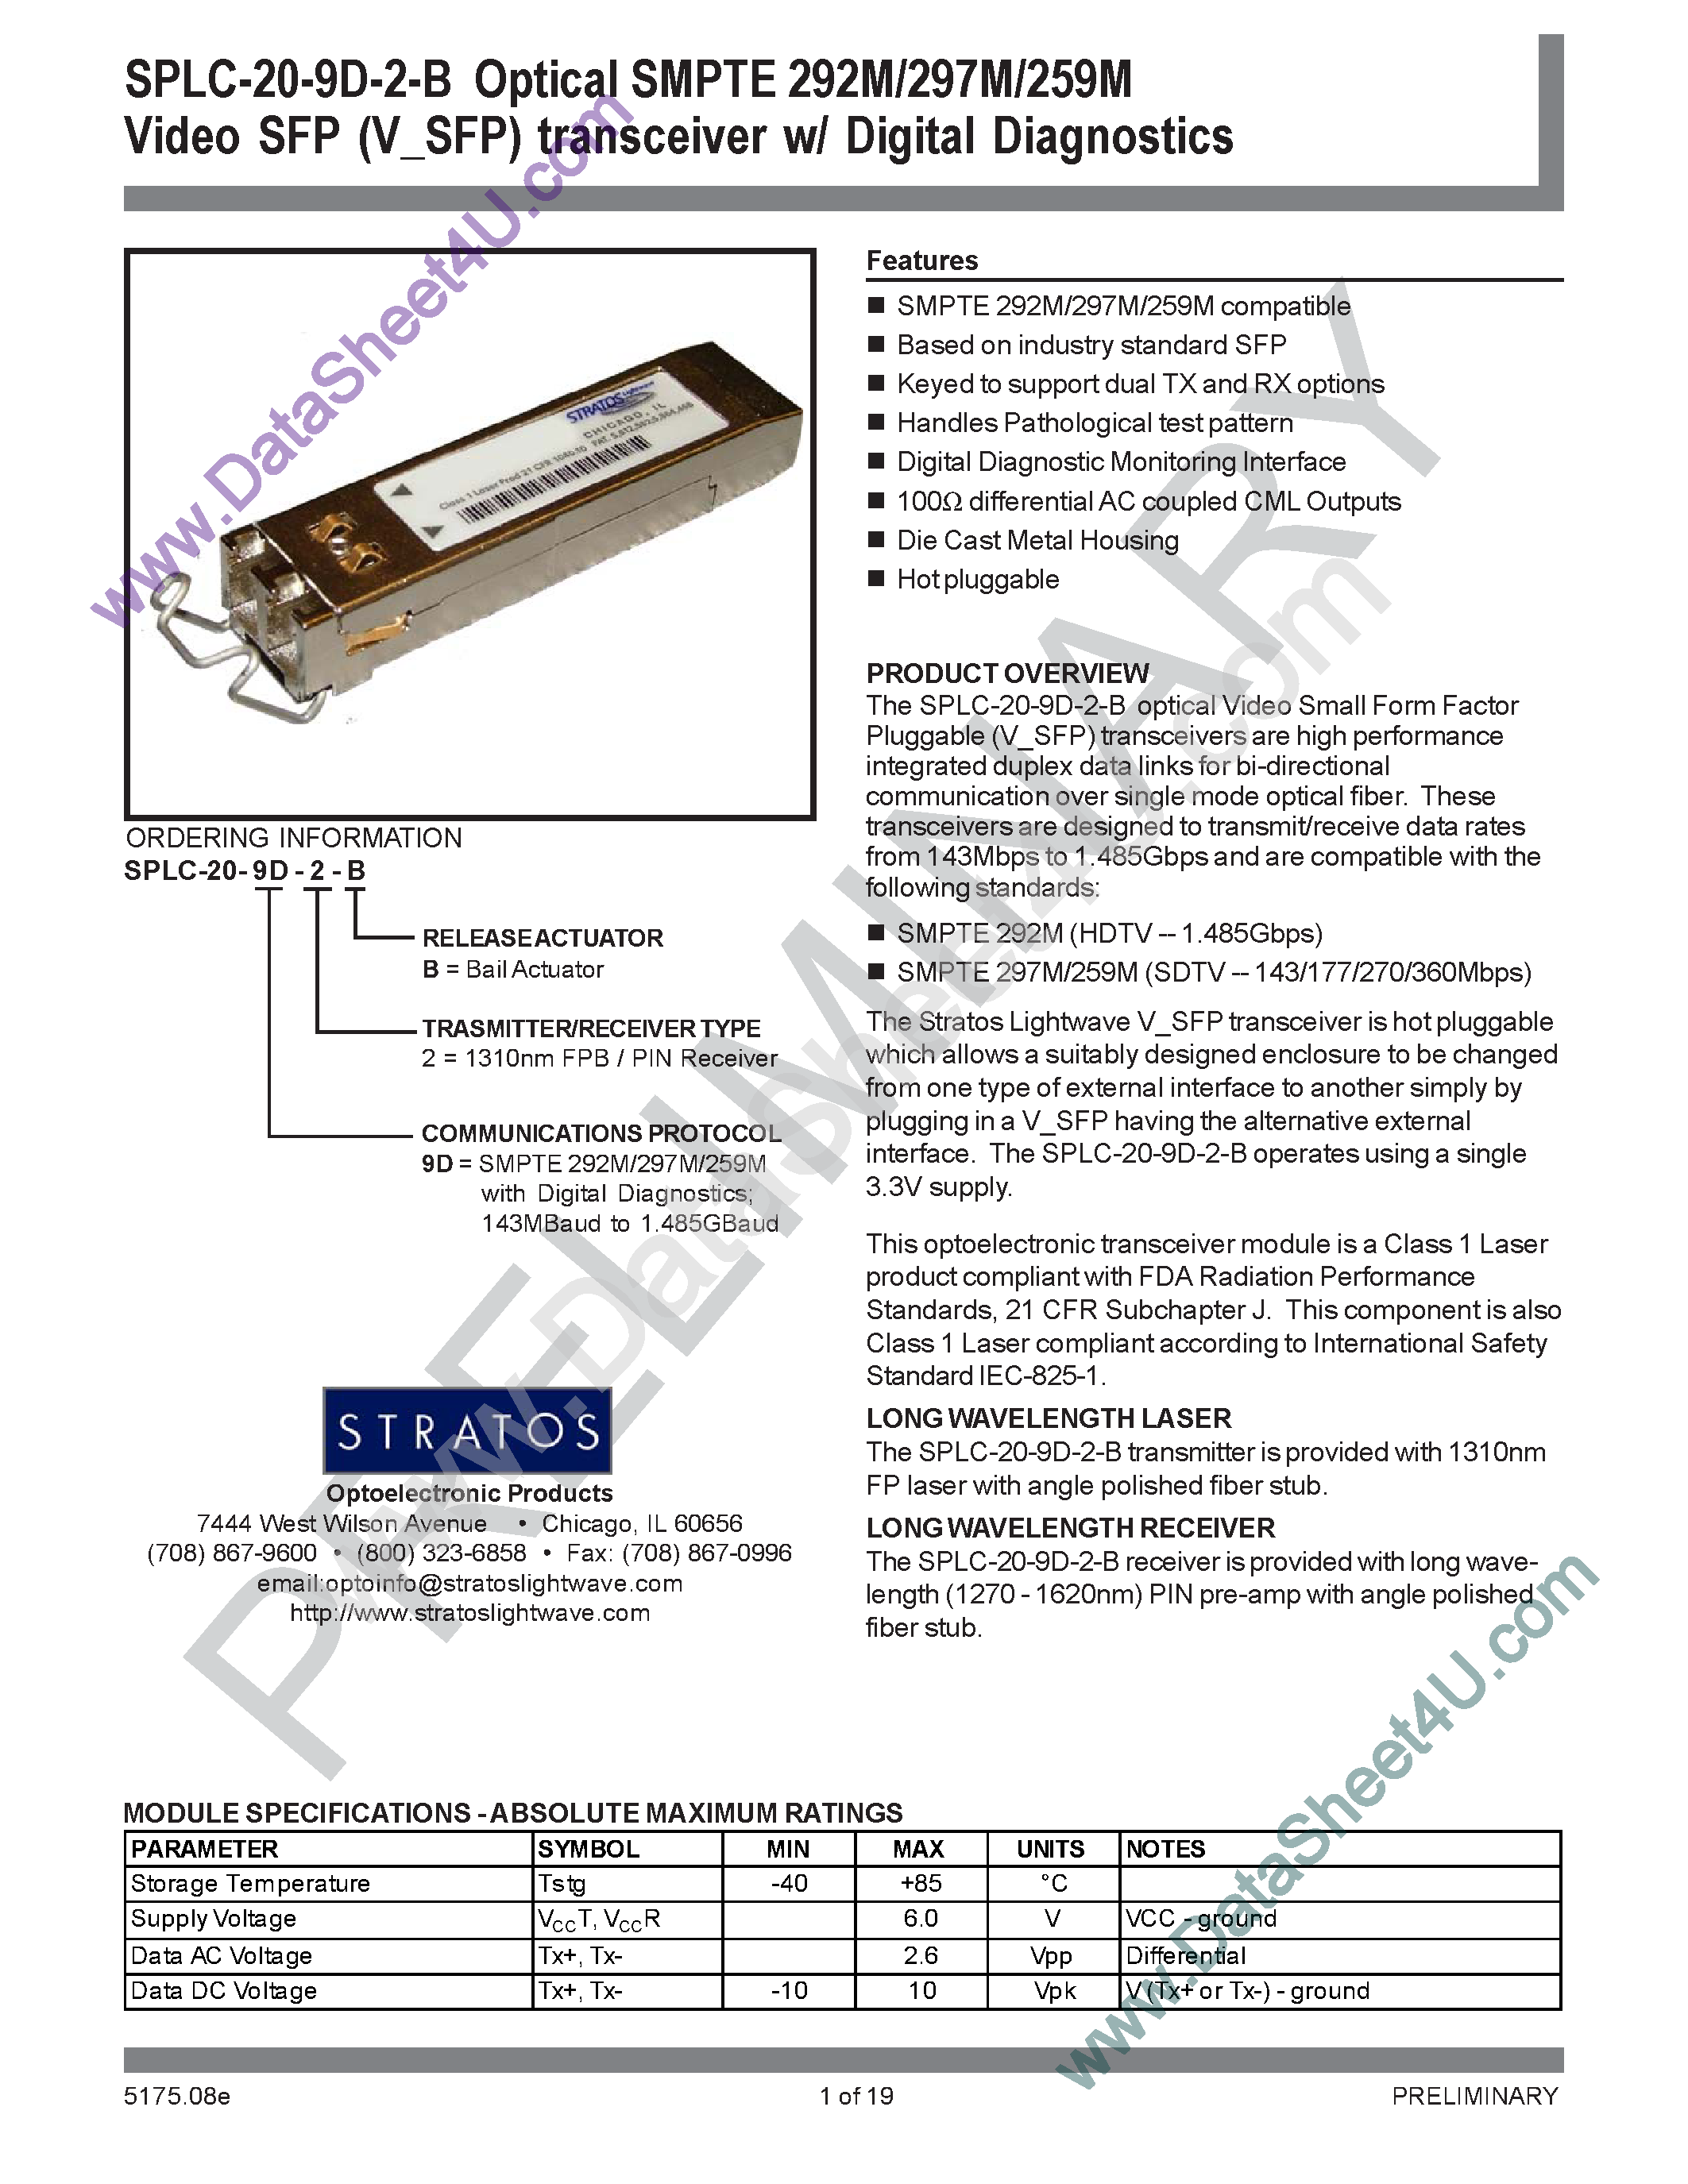 Datasheet SPLC-20-9D-2-B - Optical SMPTE Video SFP Transceiver page 1